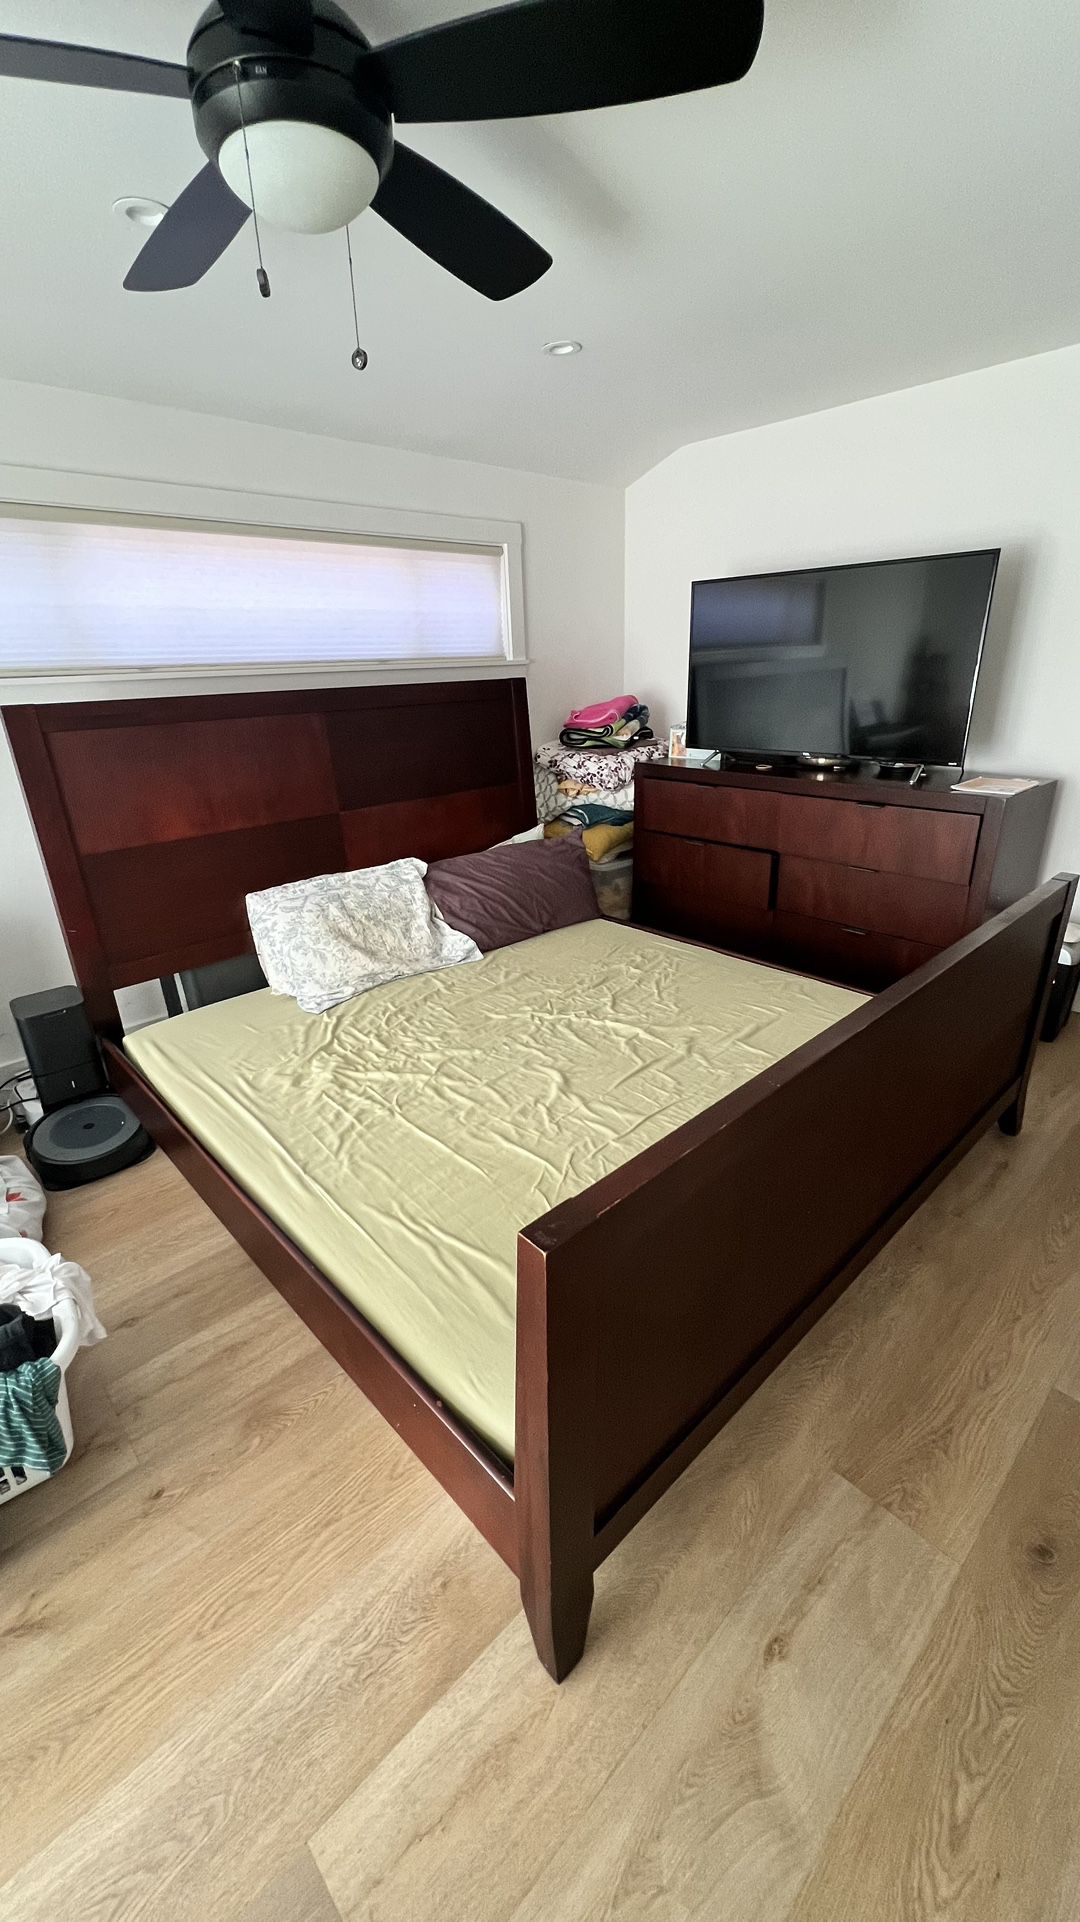 Bed Frame and Dresser - Free 